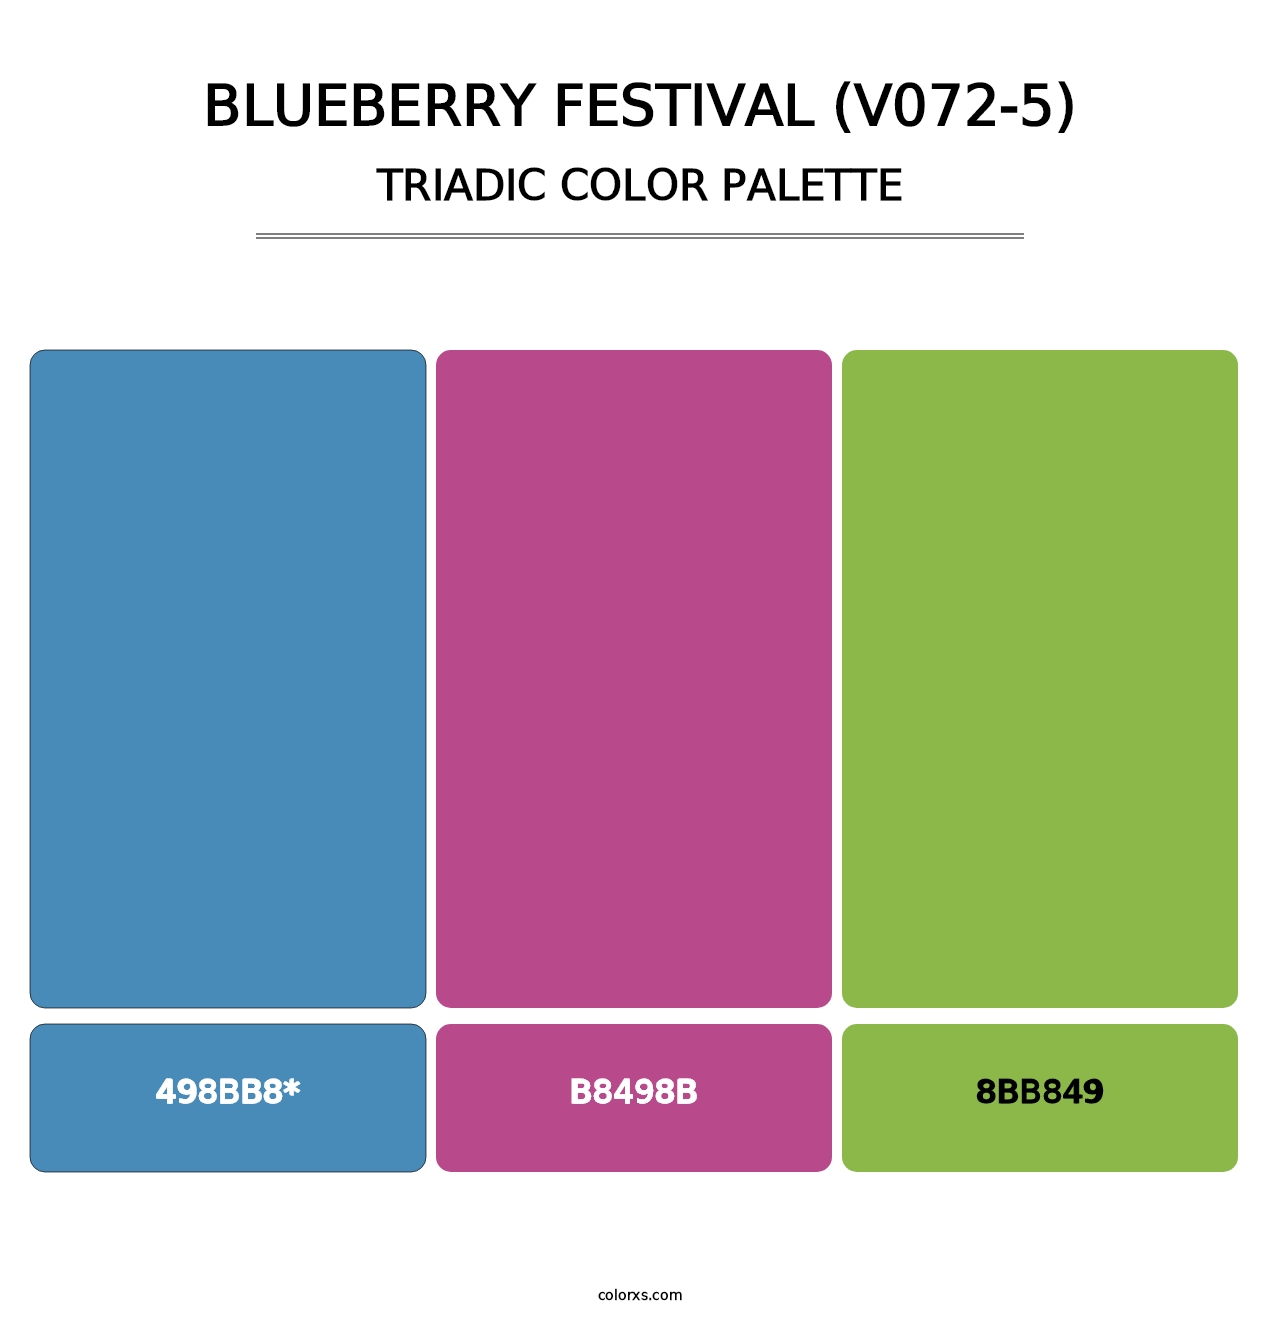 Blueberry Festival (V072-5) - Triadic Color Palette